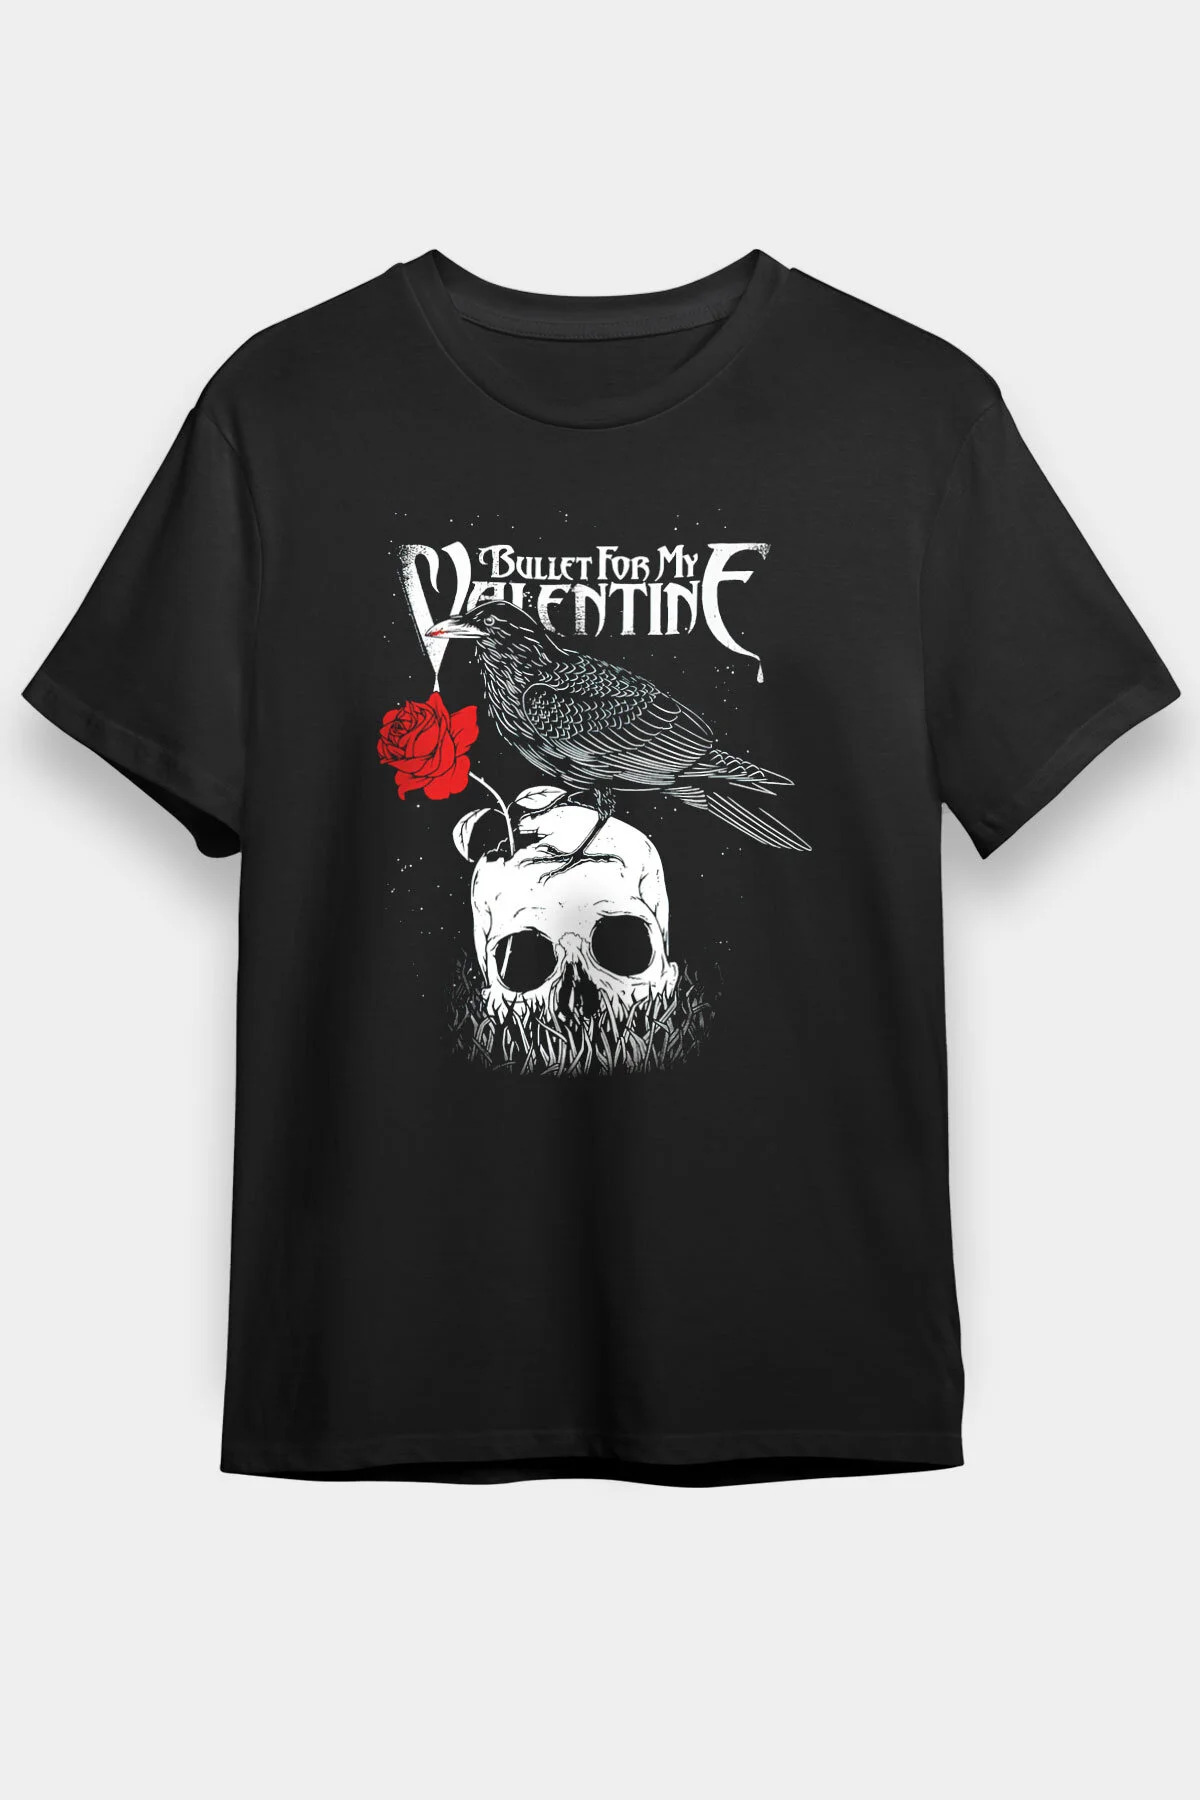 Bullet for My Valentine ,Rock Music Band ,Unisex Tshirt 35/